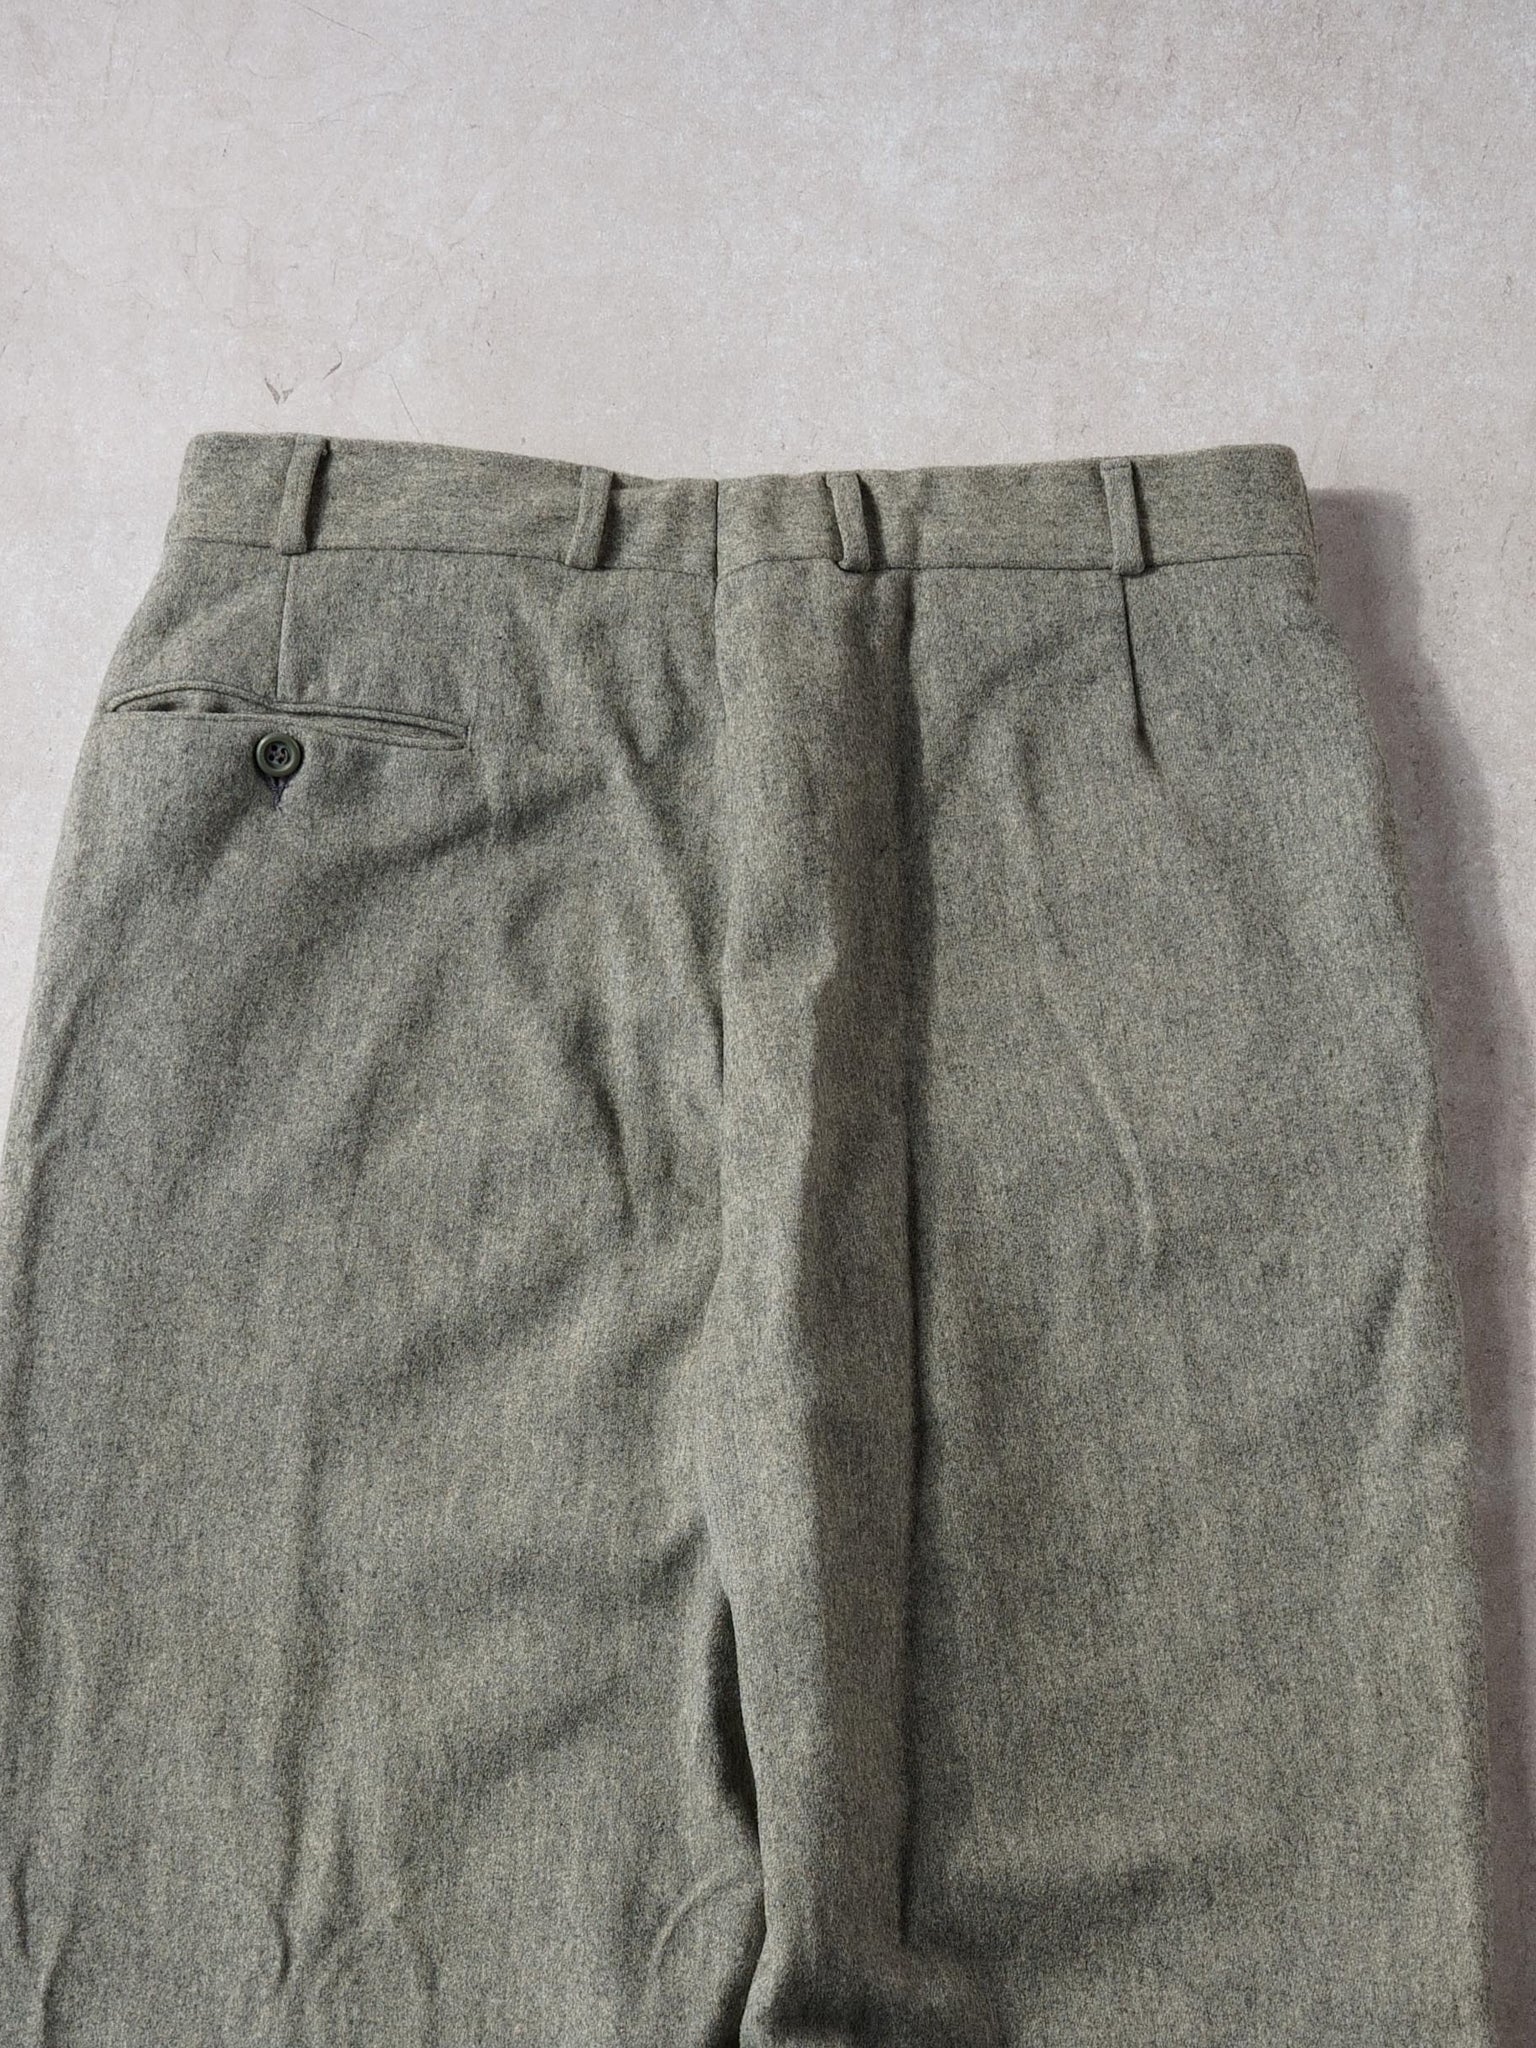 Vintage 70s Grey Wool Dress Pants (32x31)